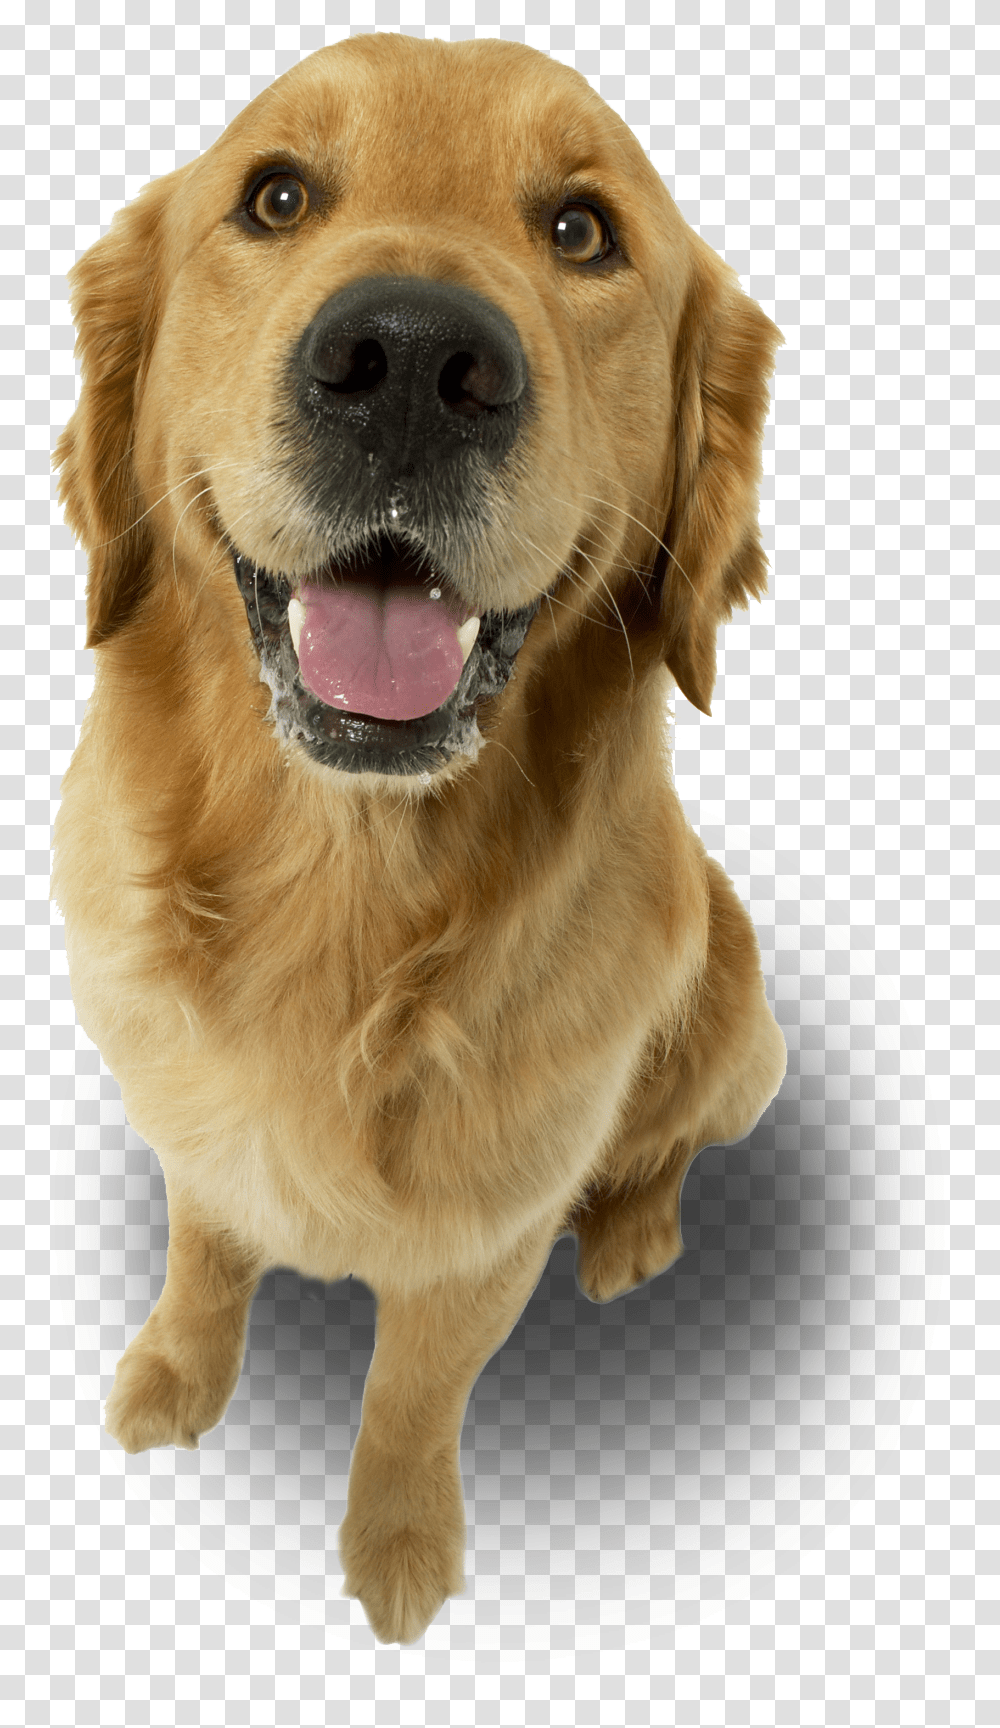 Dog Love My Golden Retriever Ornament Oval Full Size Imagens De Animais Para Final De Slide, Pet, Canine, Animal, Mammal Transparent Png